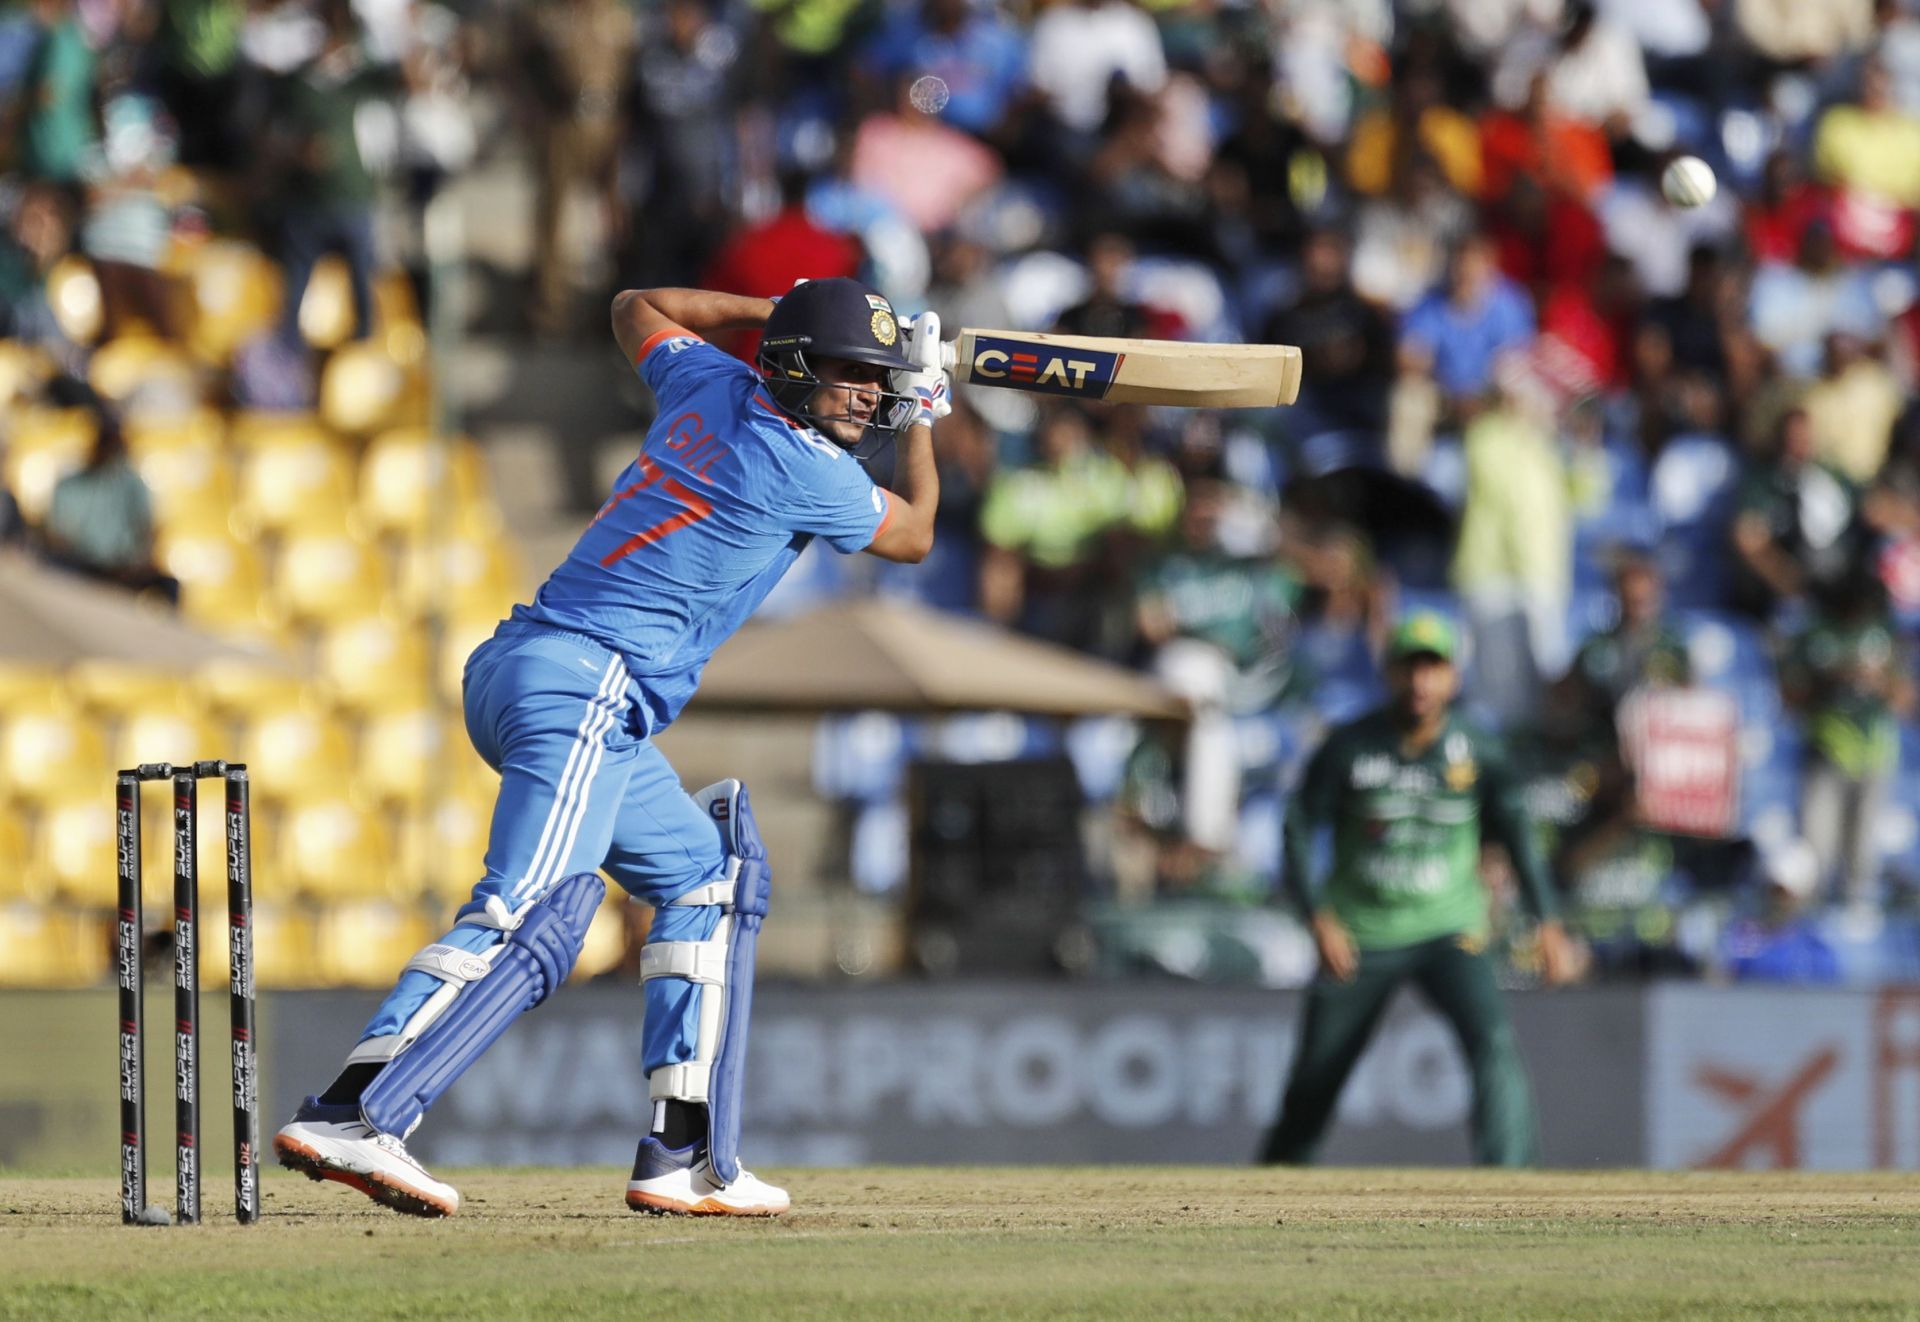 The Indian top-order batters were tentative against Pakistan. [P/C: AP]